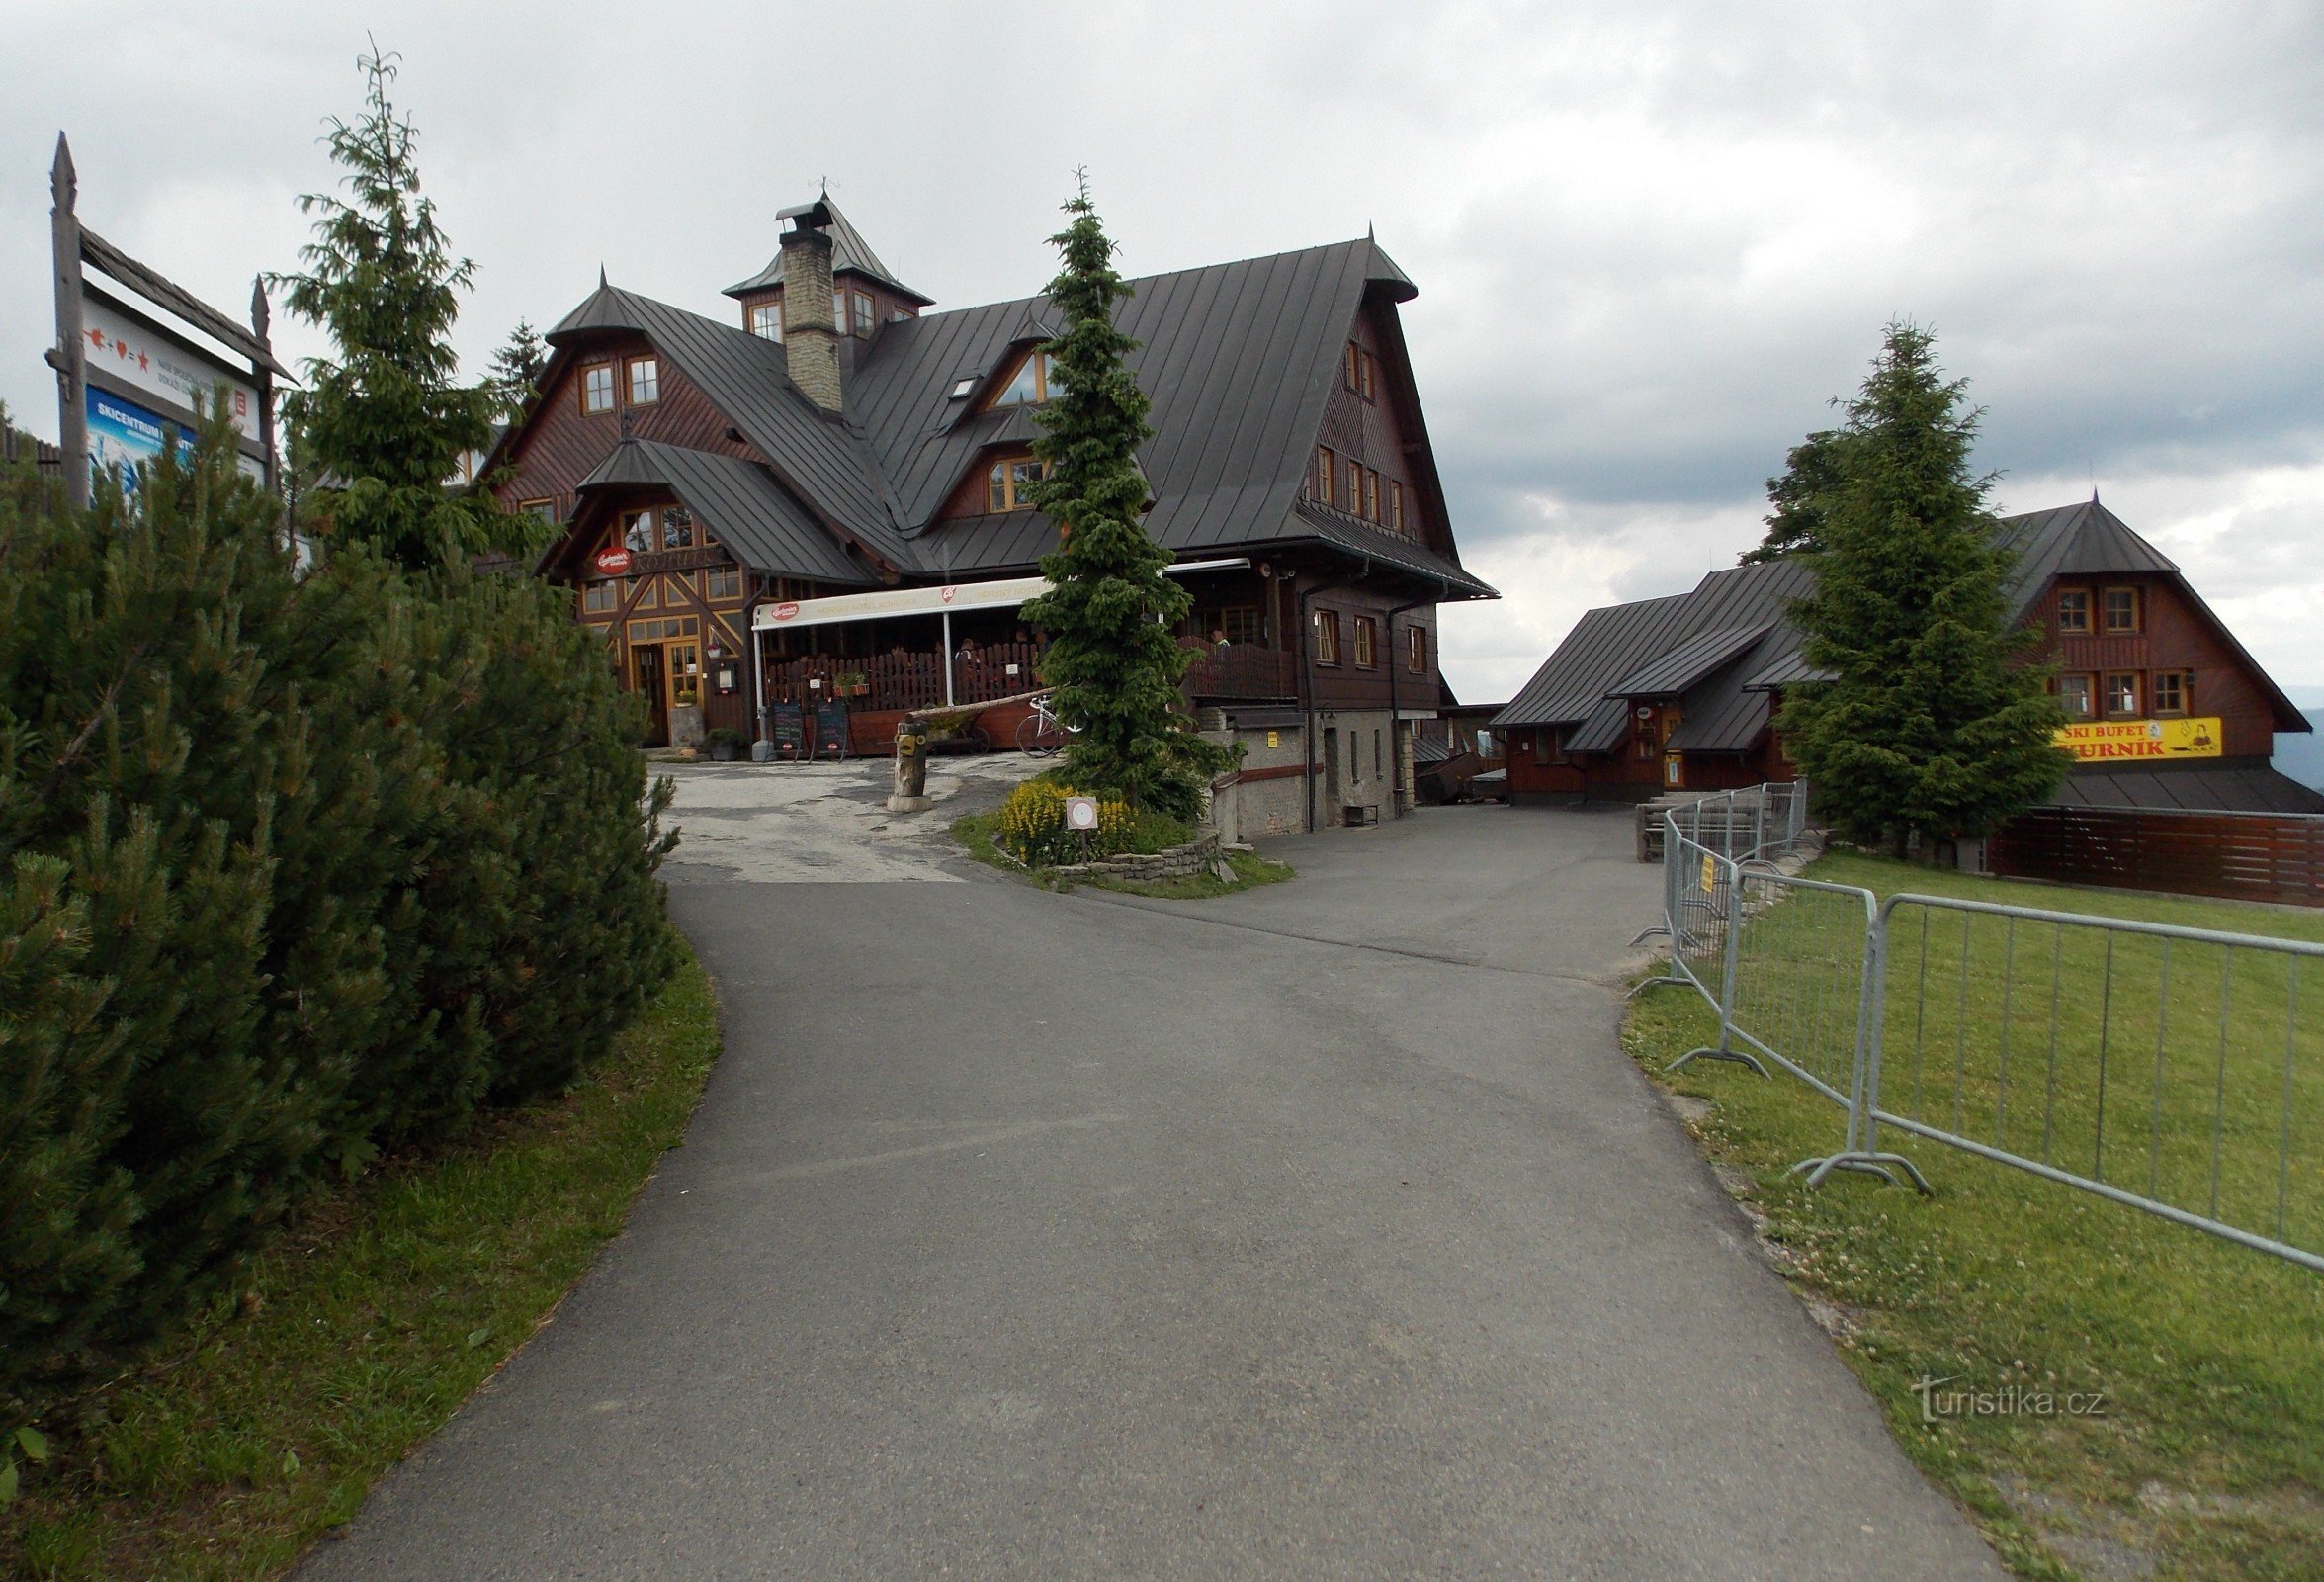 Hotel Kohútka și bufet de schi Kurník